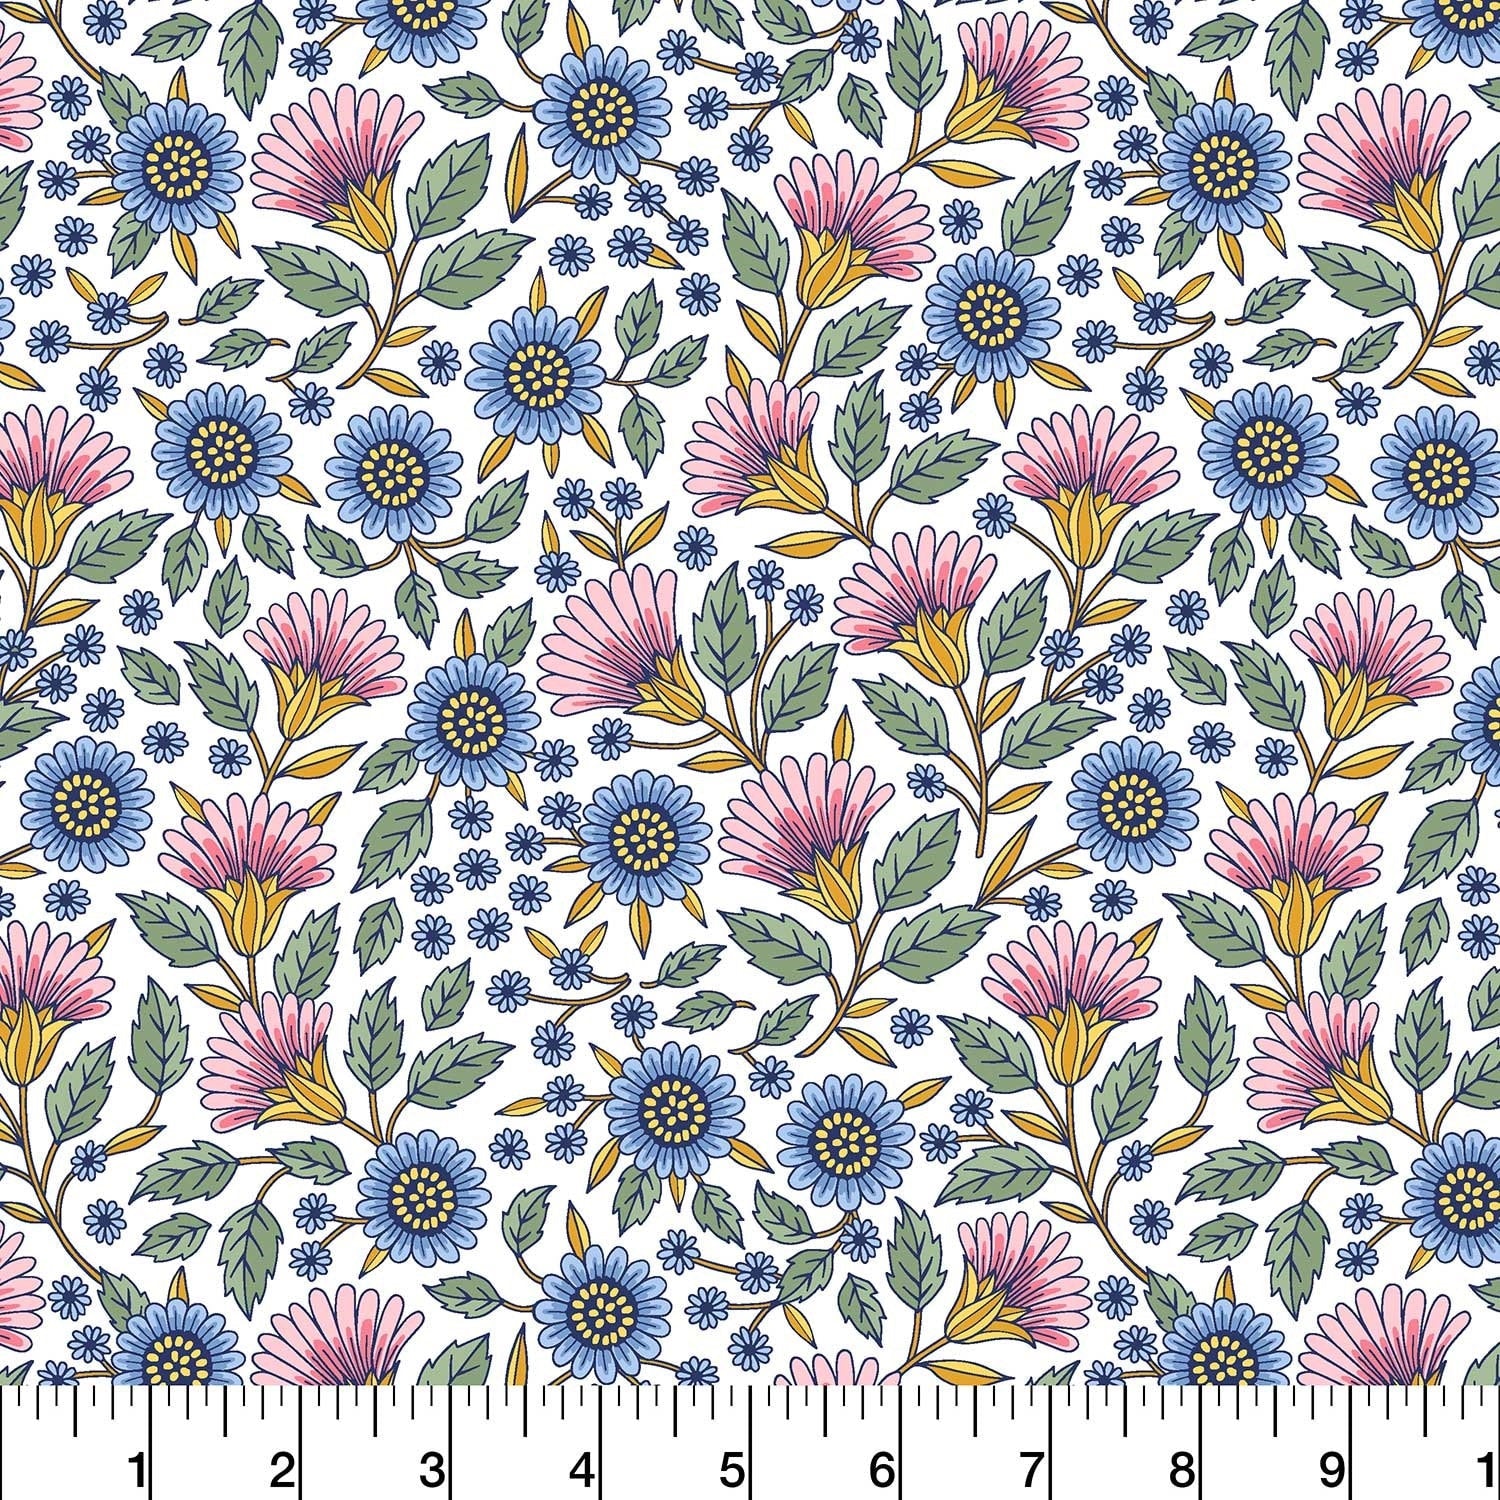 Baumgartens Fabric Tape Measure ASSORTED Colors (67740) – Baumgartens 